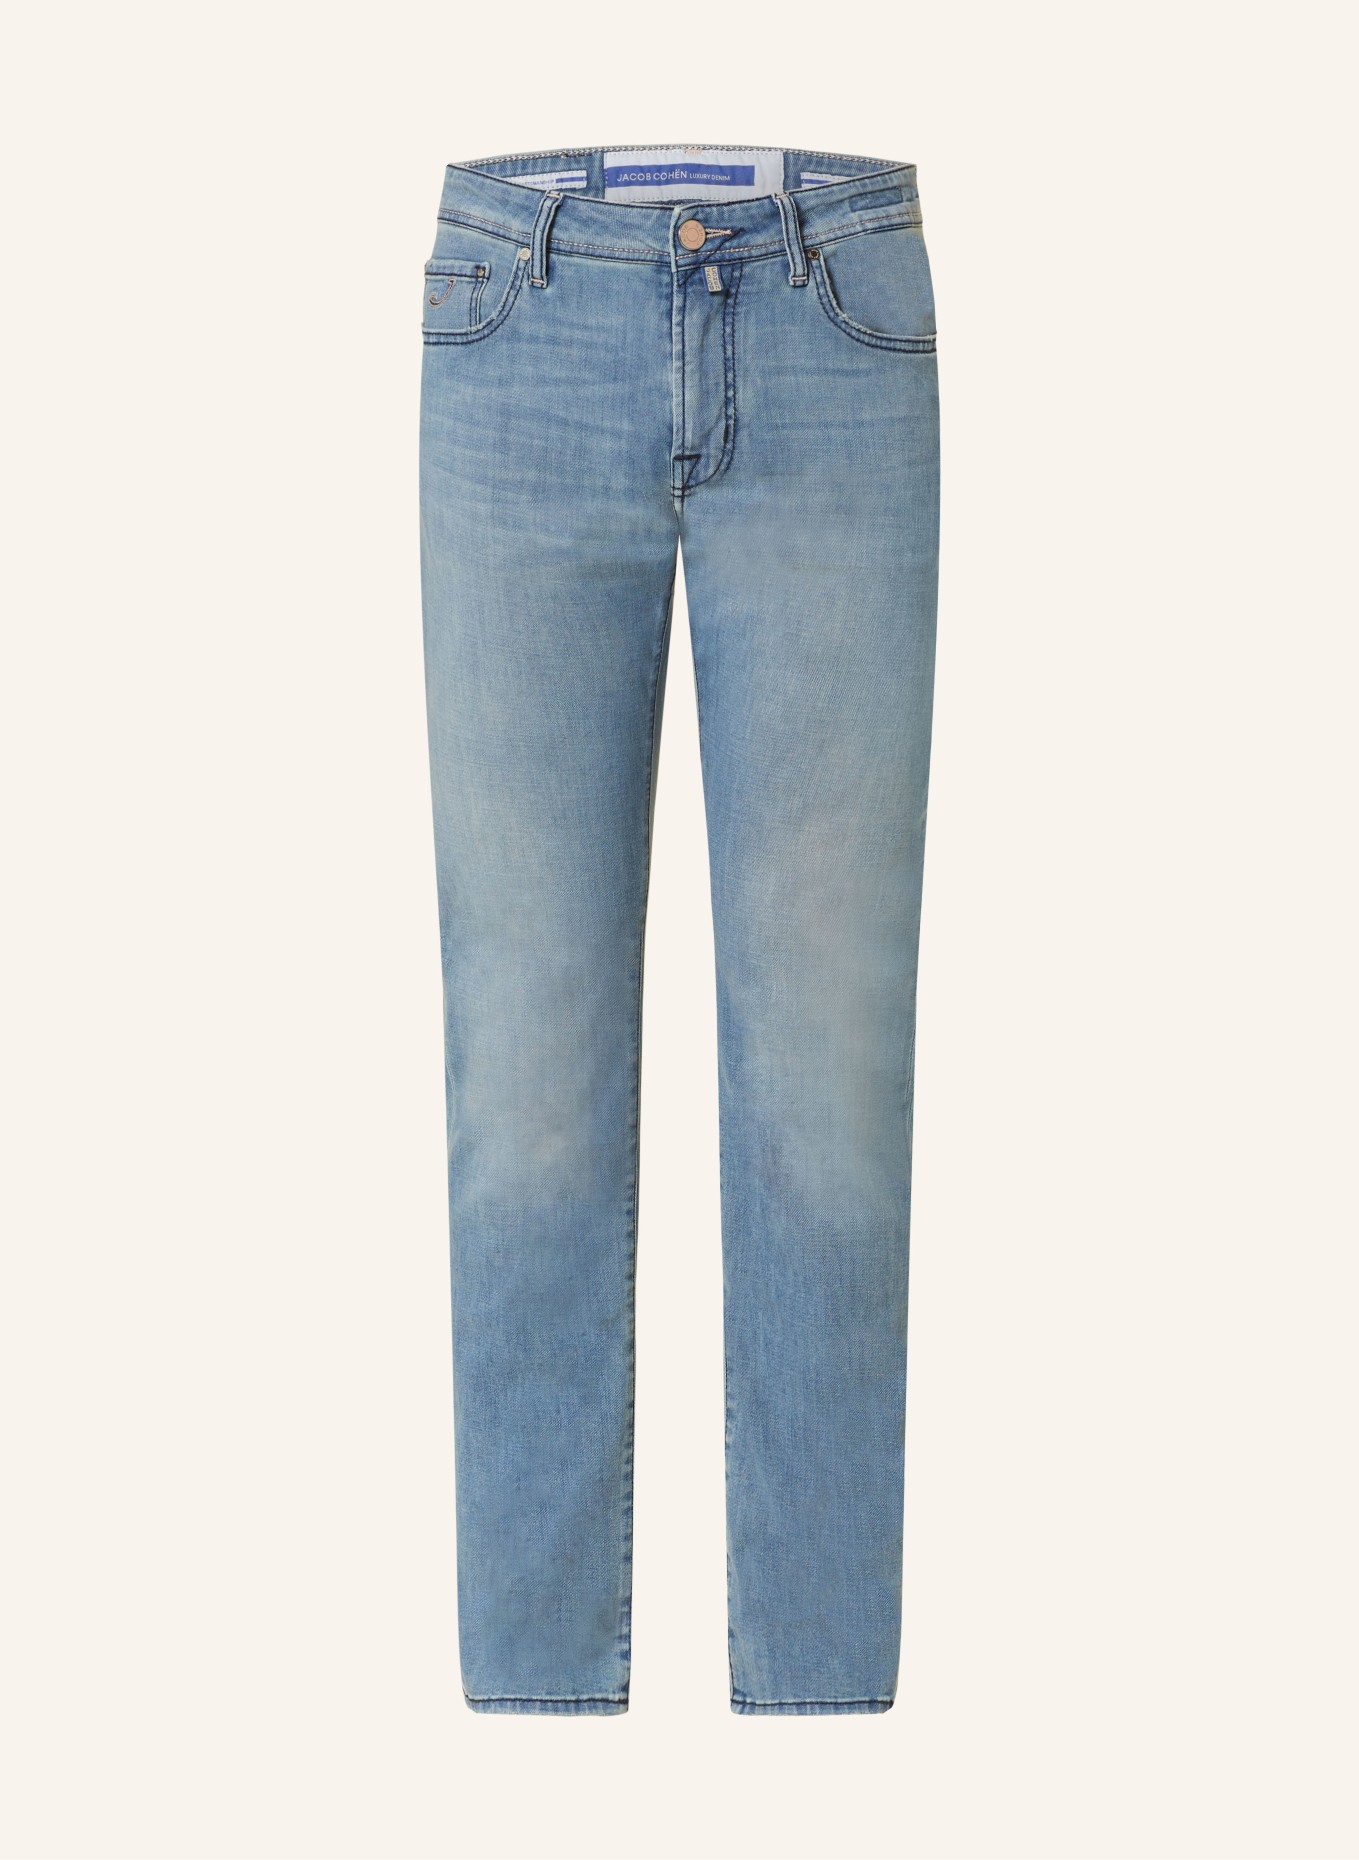 JACOB COHEN Jeans BARD Slim Fit, Farbe: 701D Light Blue (Bild 1)